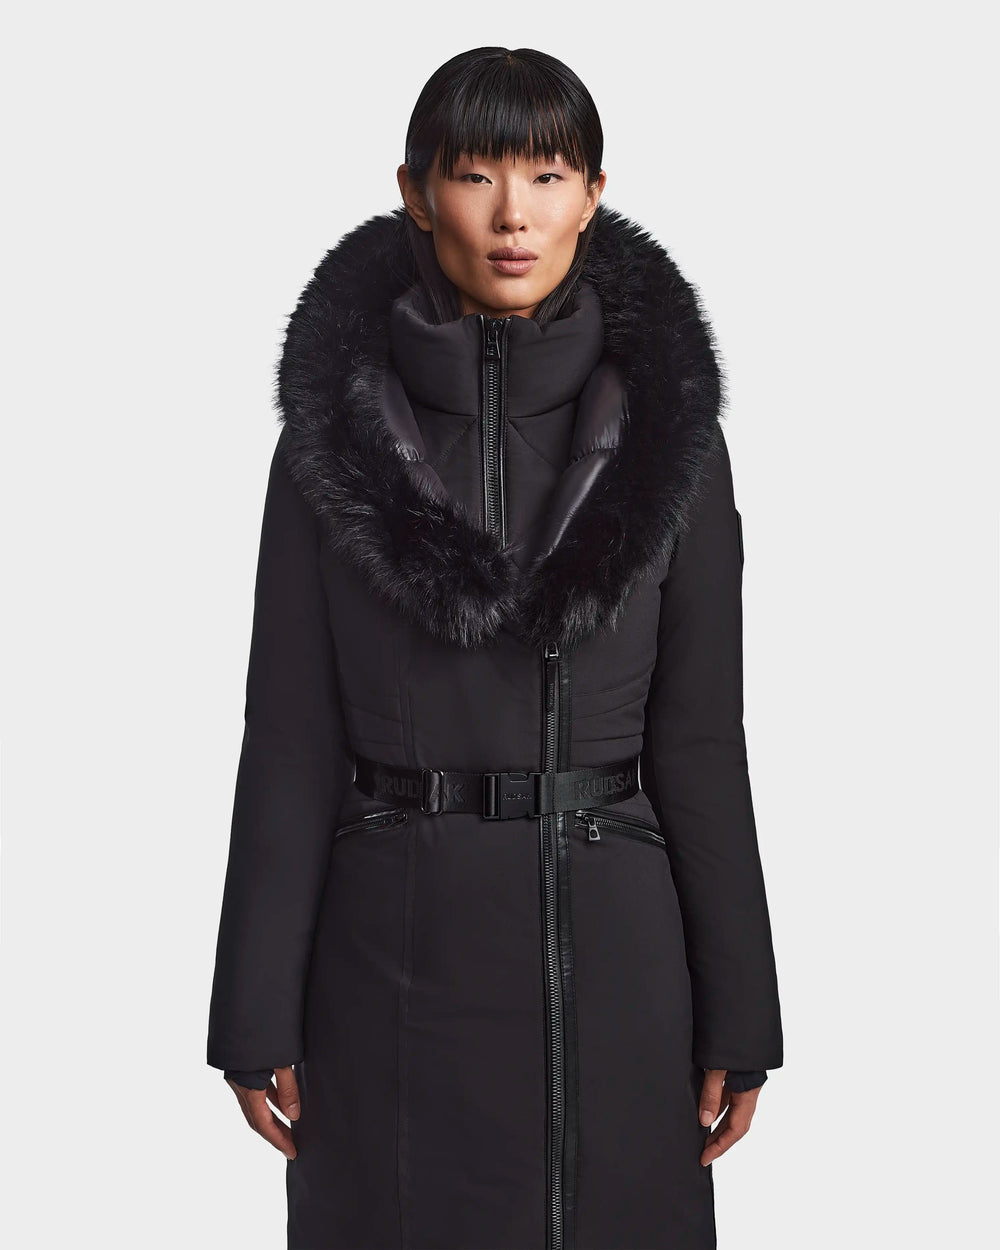 Women's All-Weather Faux Fur-Lined Parka, Women's Select Styles On Sale